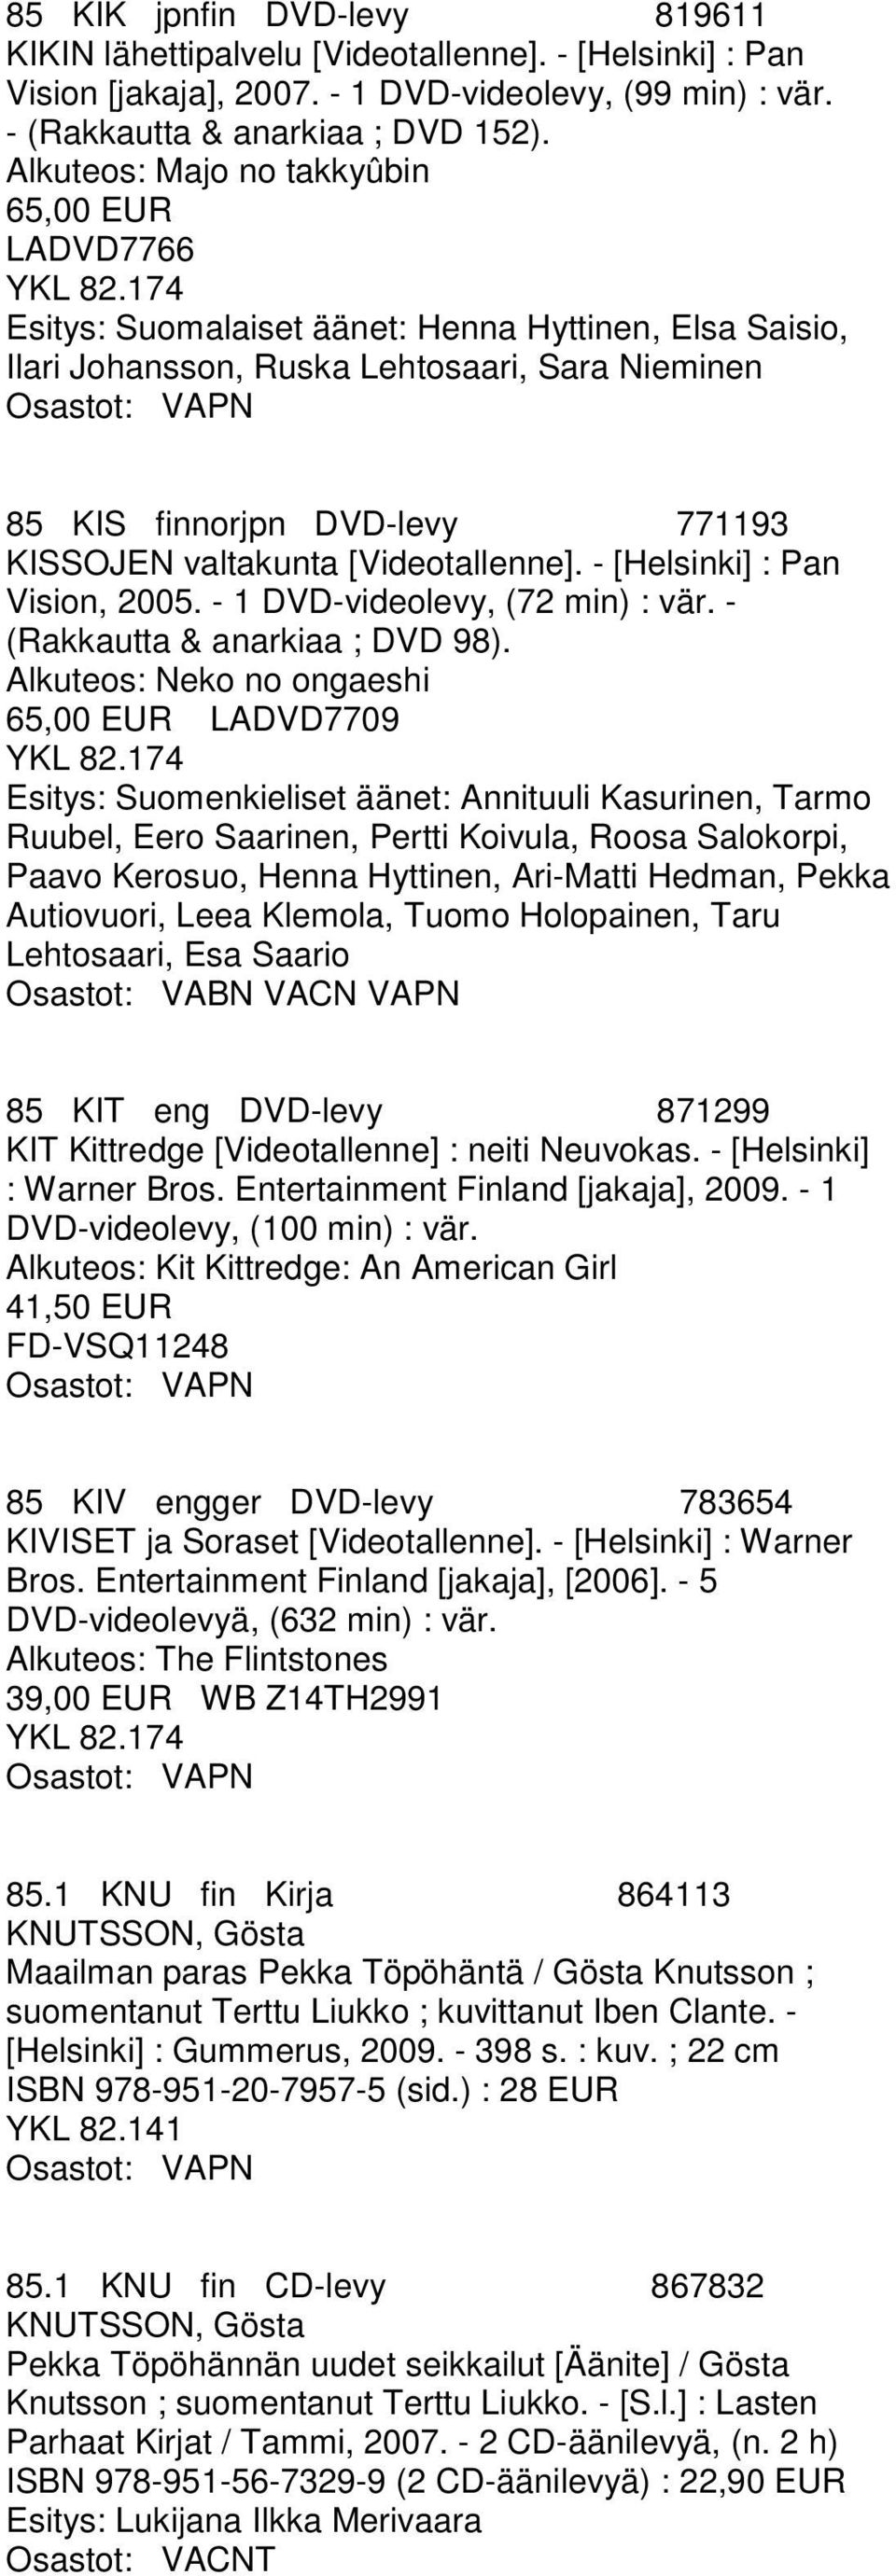 valtakunta [Videotallenne]. - [Helsinki] : Pan Vision, 2005. - 1 DVD-videolevy, (72 min) : vär. - (Rakkautta & anarkiaa ; DVD 98).